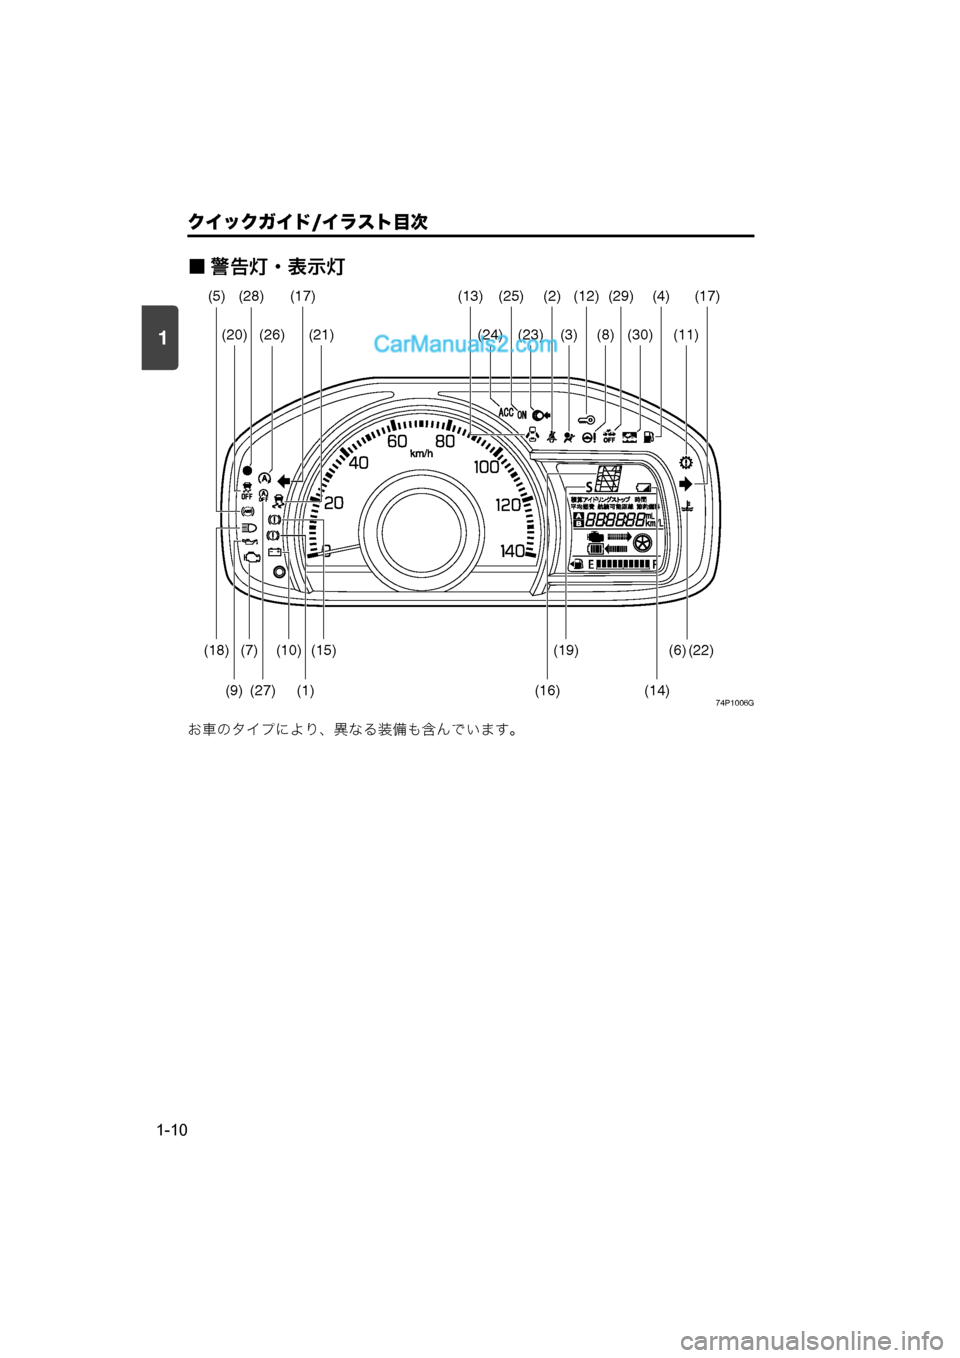 MAZDA MODEL CARROL 2015  取扱説明書 (キャロル) (in Japanese) 1
クイックガイド/イラスト目次
1-10
■ 警告灯・表示灯
74P1006G
お車のタイプにより、異なる装備も含んでいます。
(20)
(5)
(28)
(6) (22)(18)(10)(15)(19)
(16)� (